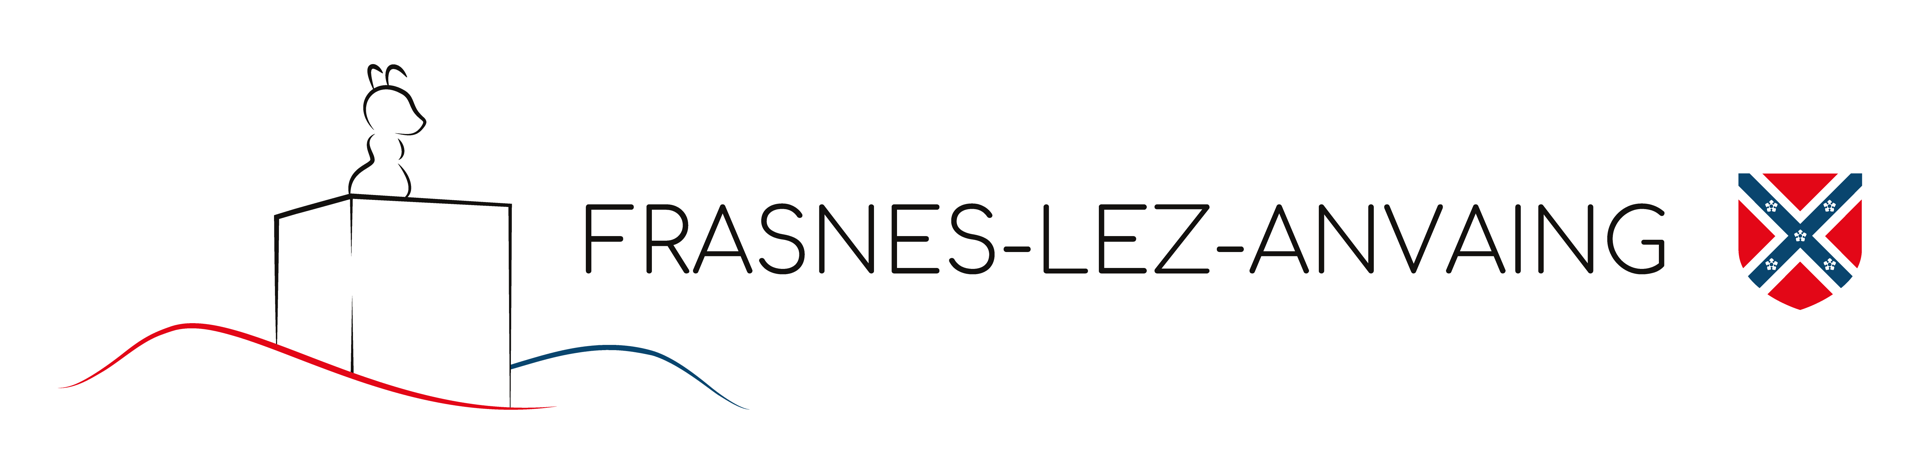 Frasnes-Lez-Anvaing